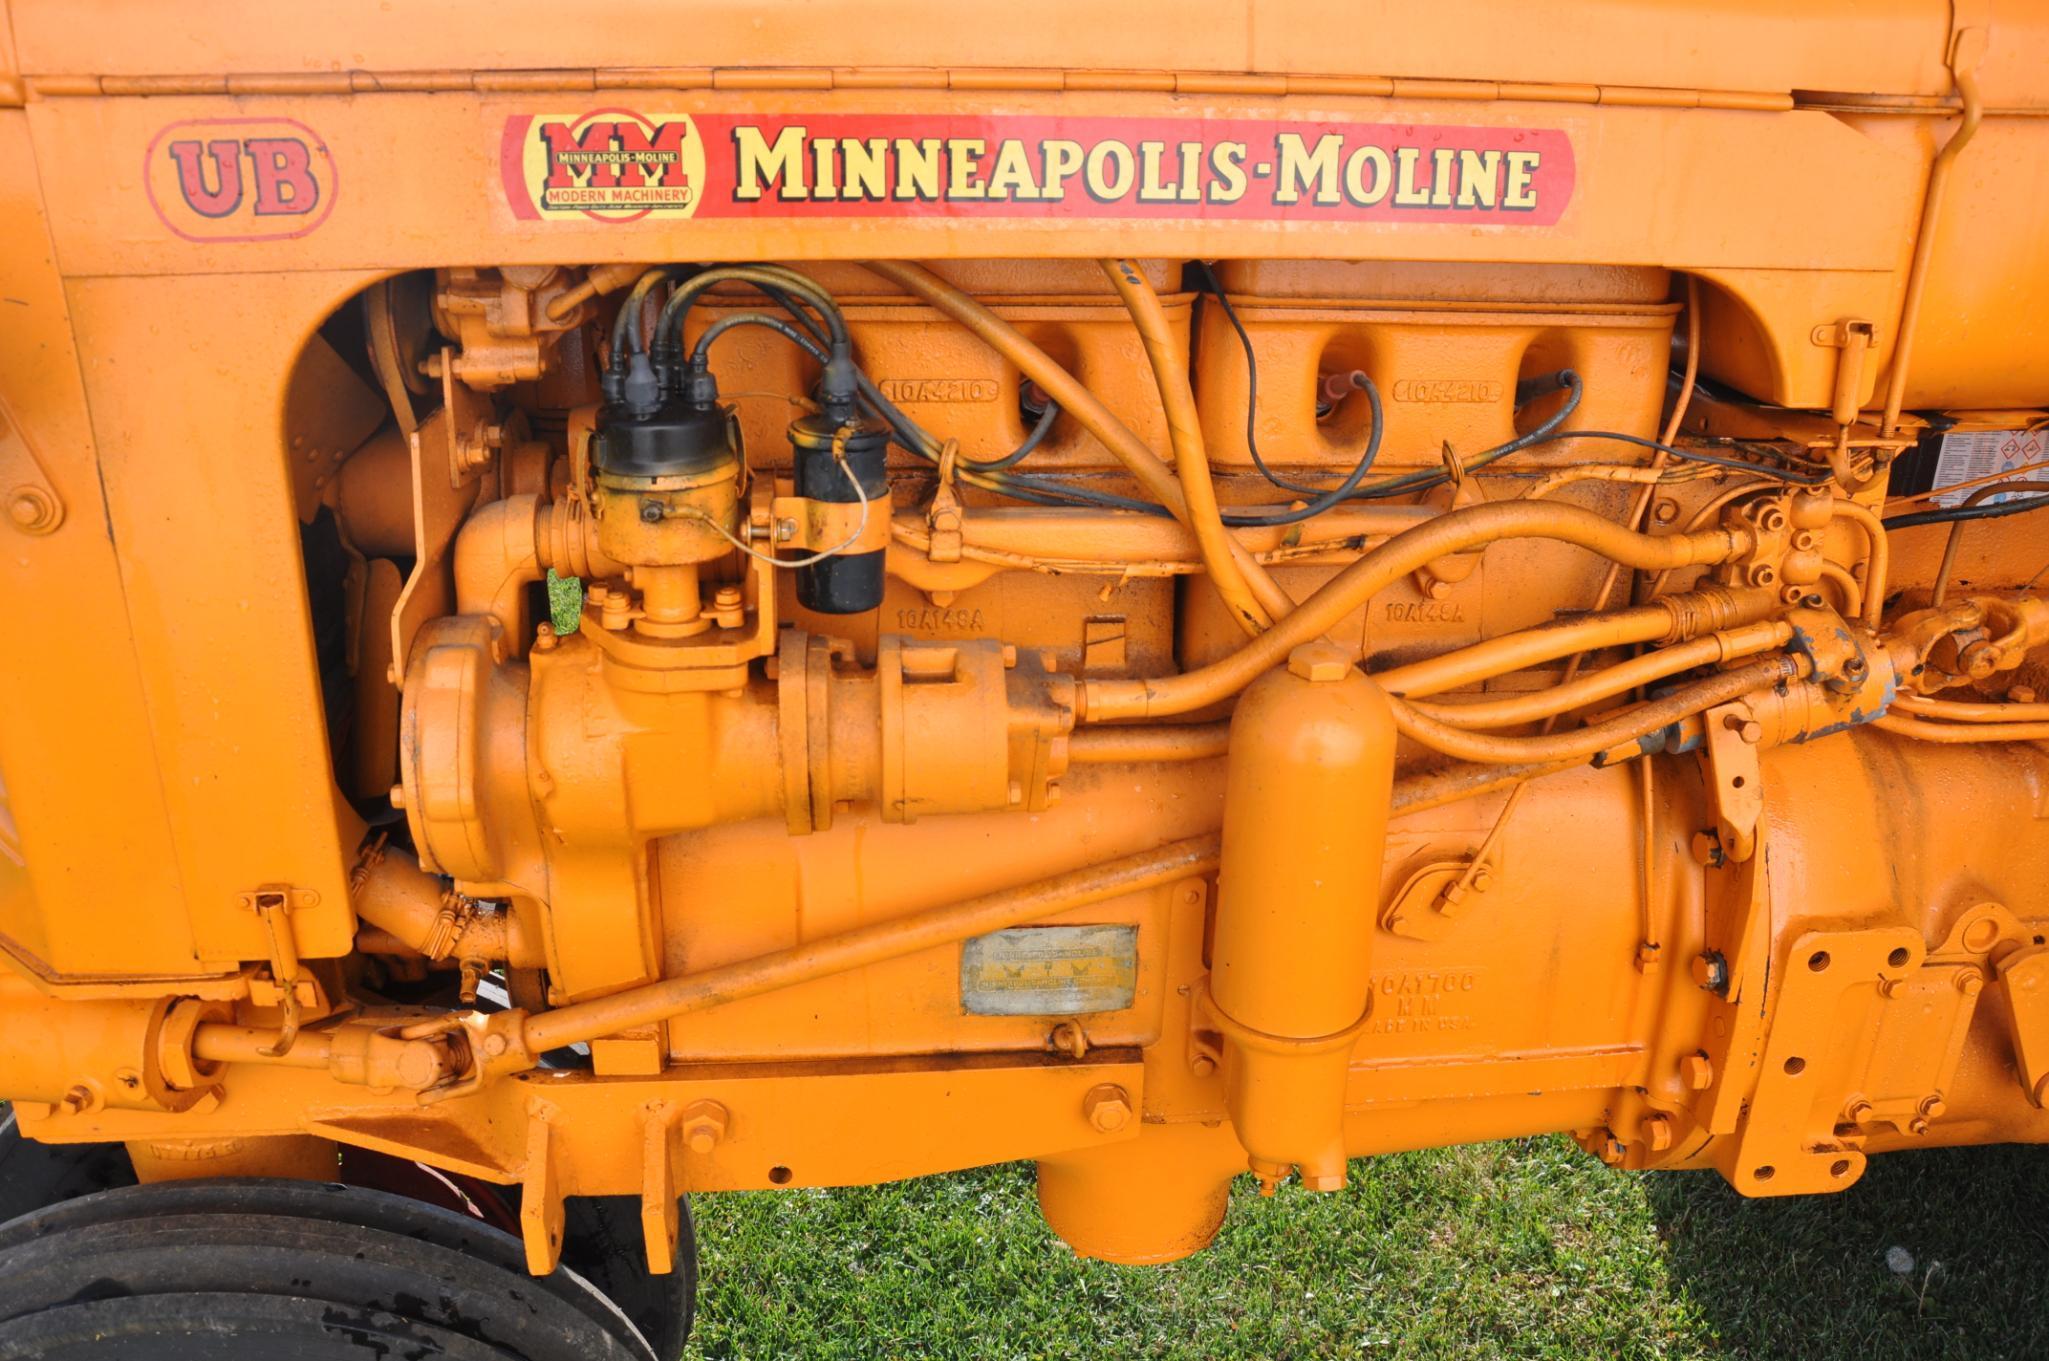 Minneapolis Moline UB tractor